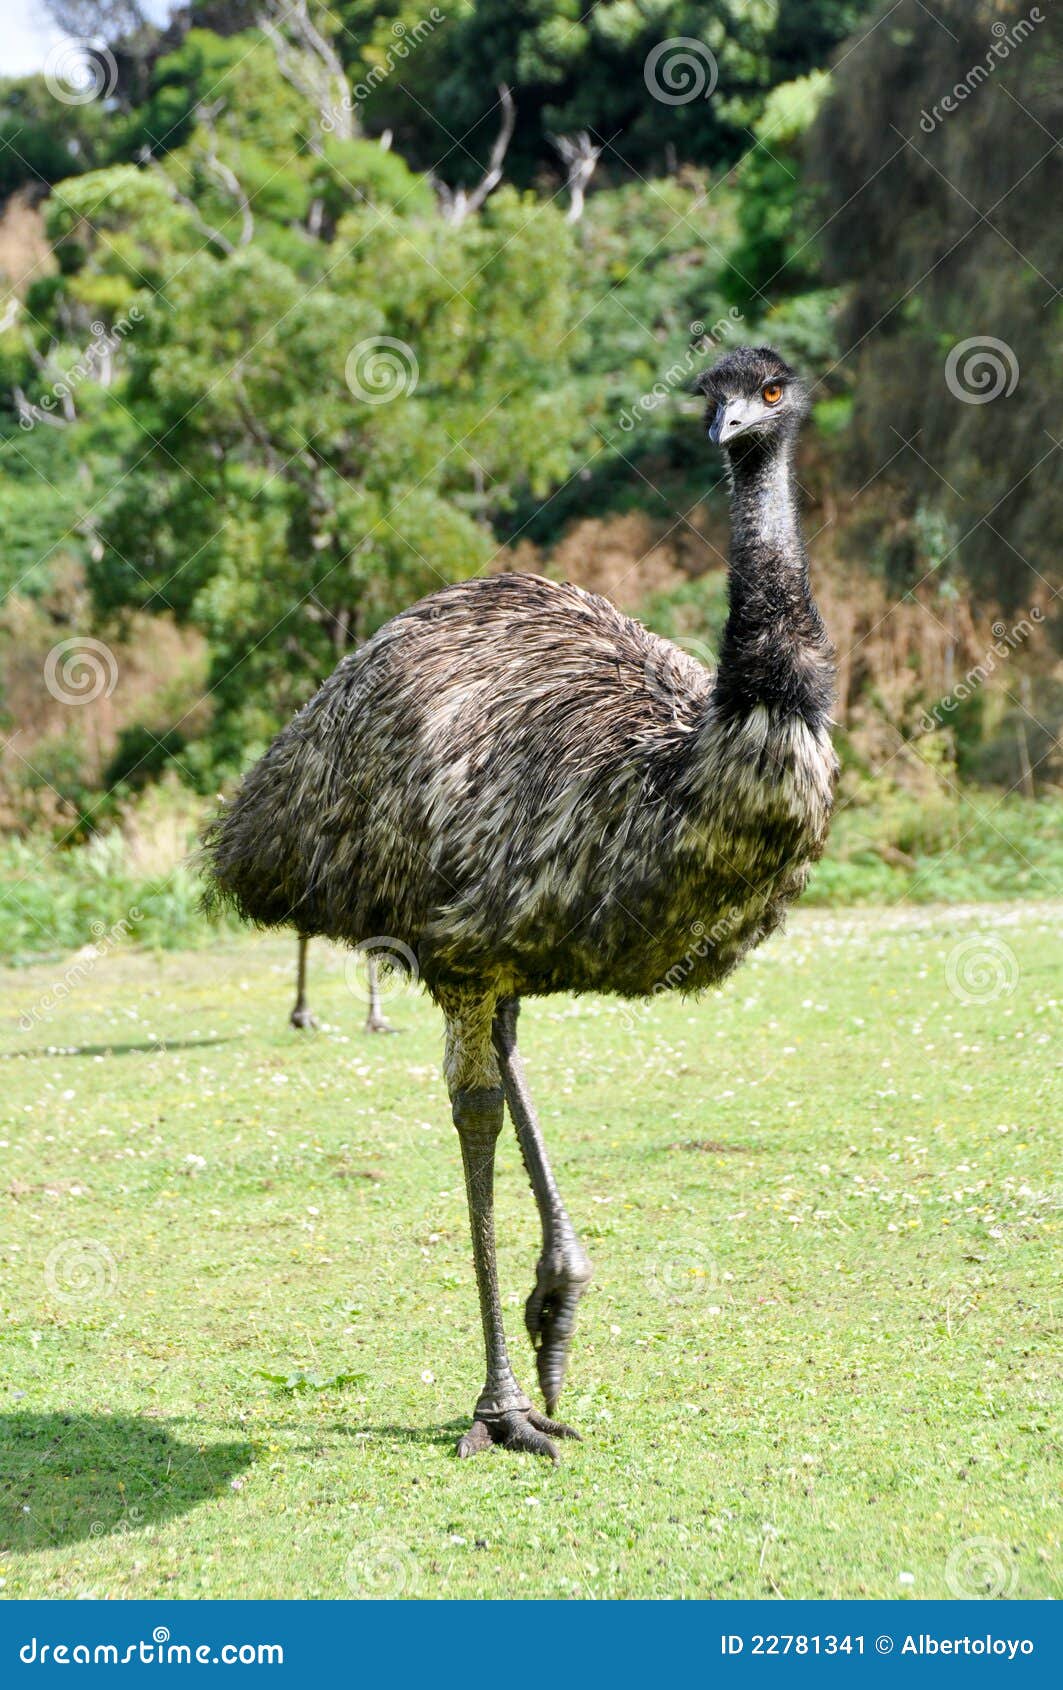 australian emu at tower hill wildlife reserve